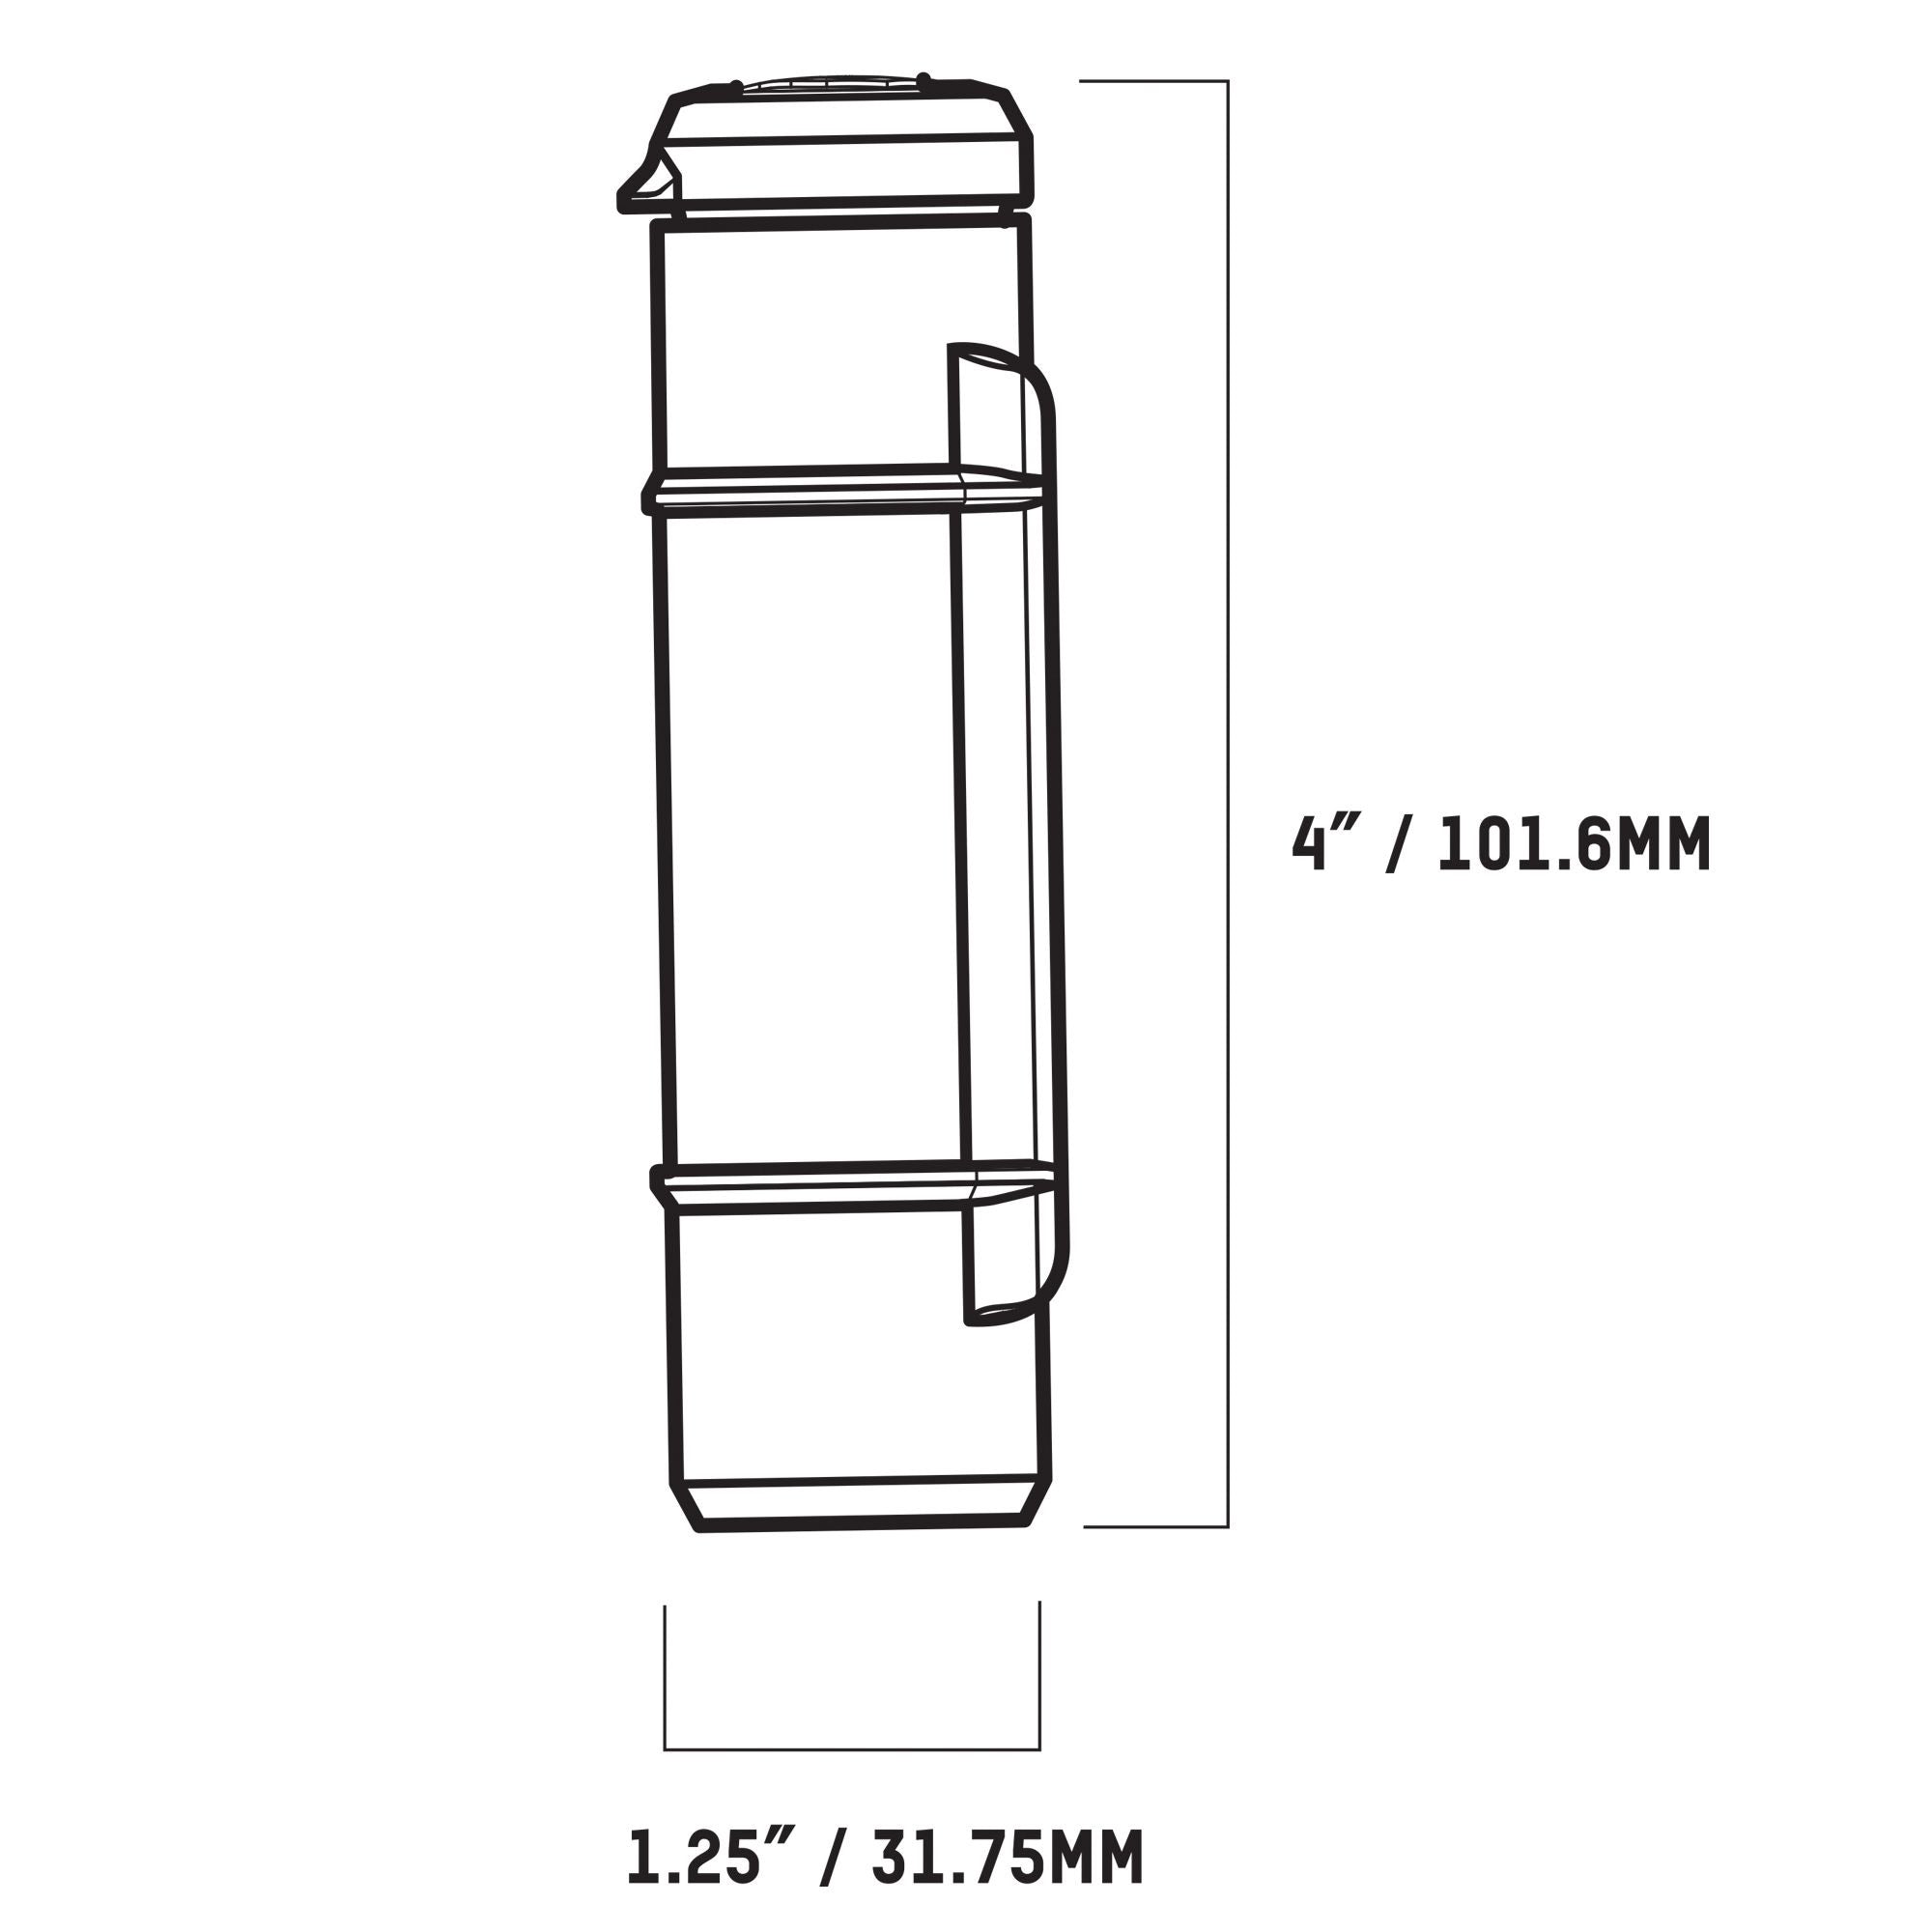 Blackburn tubeless plug kit dimensions